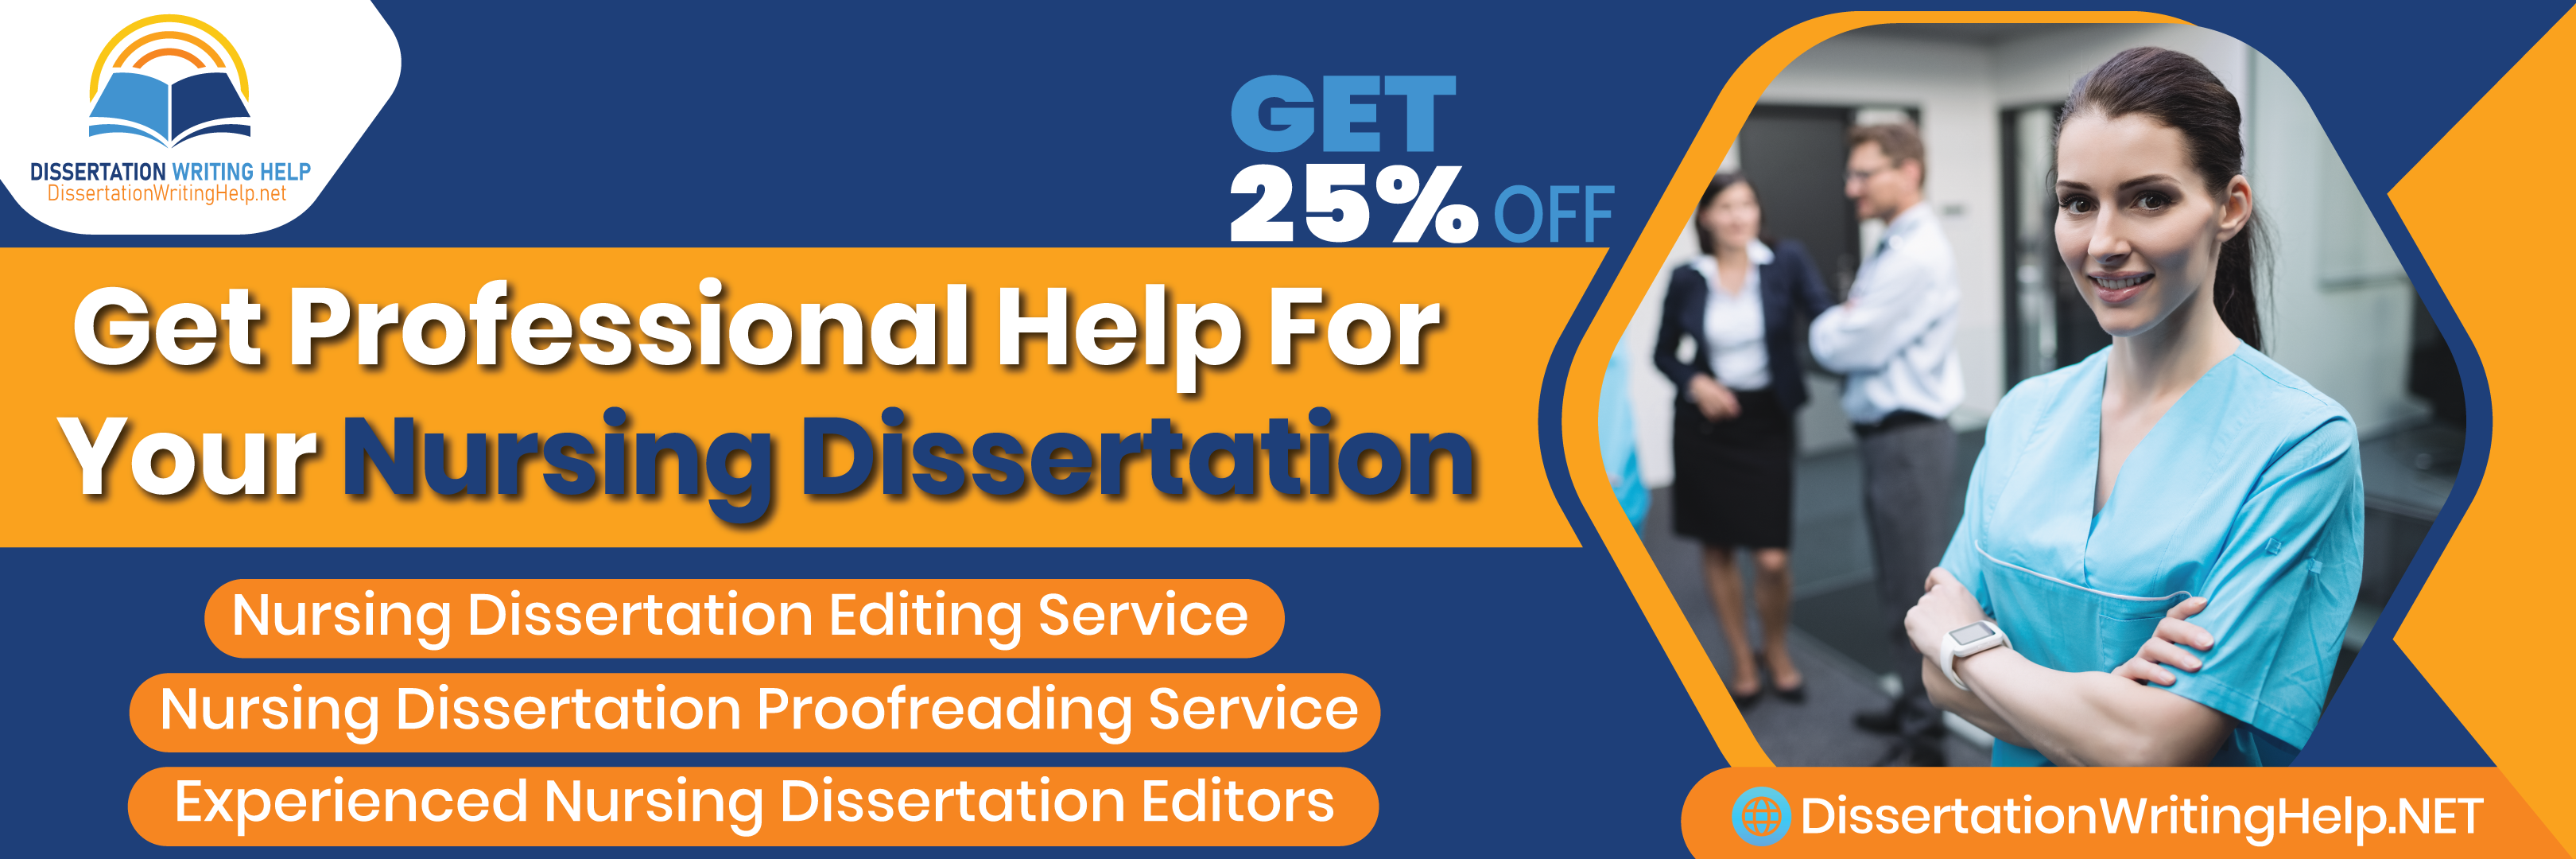 nursing-dissertation-editing-and-proofreading-service